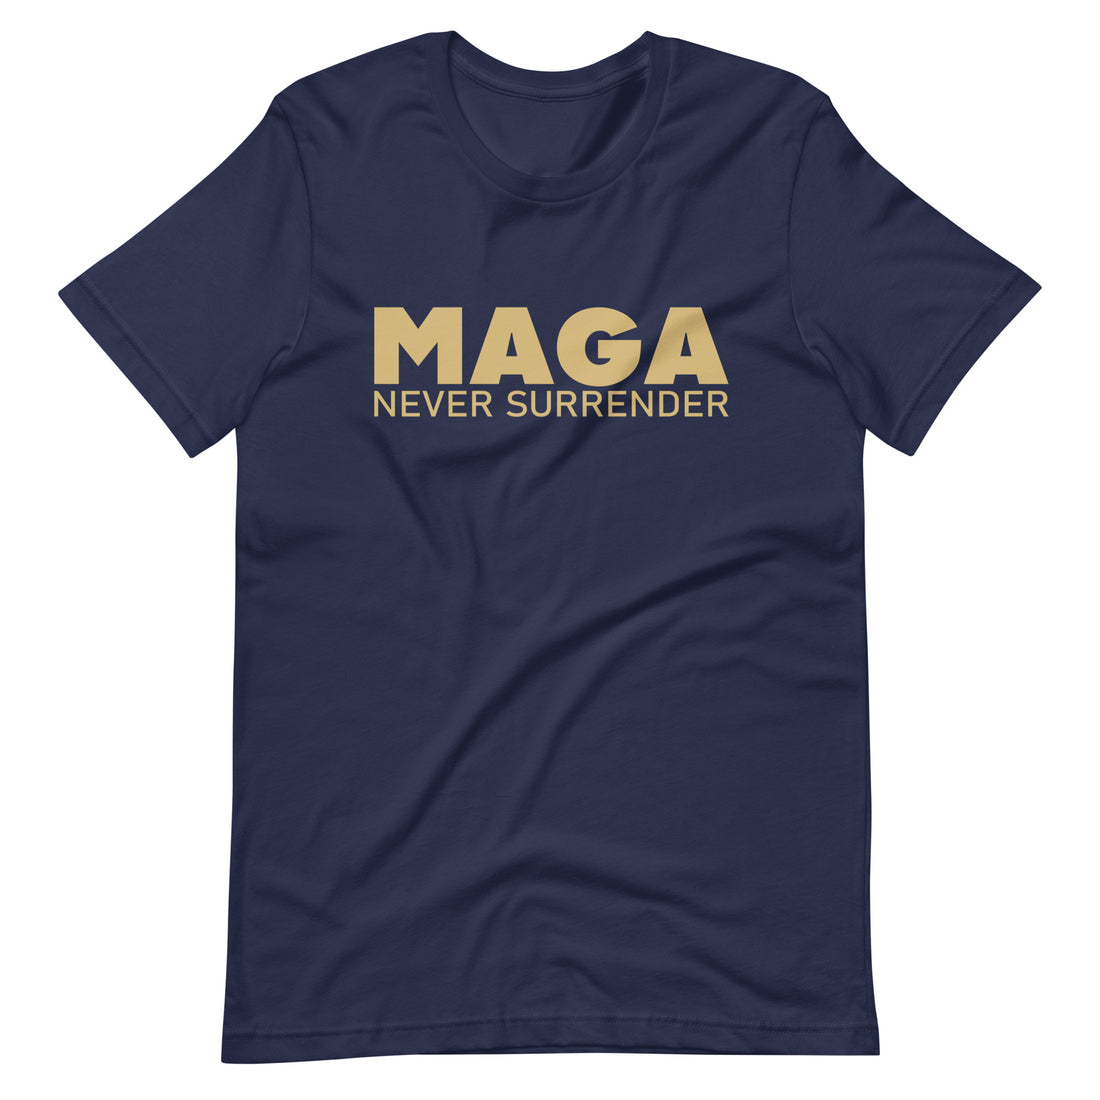 MAGA NEVER SURRENDER t-shirt